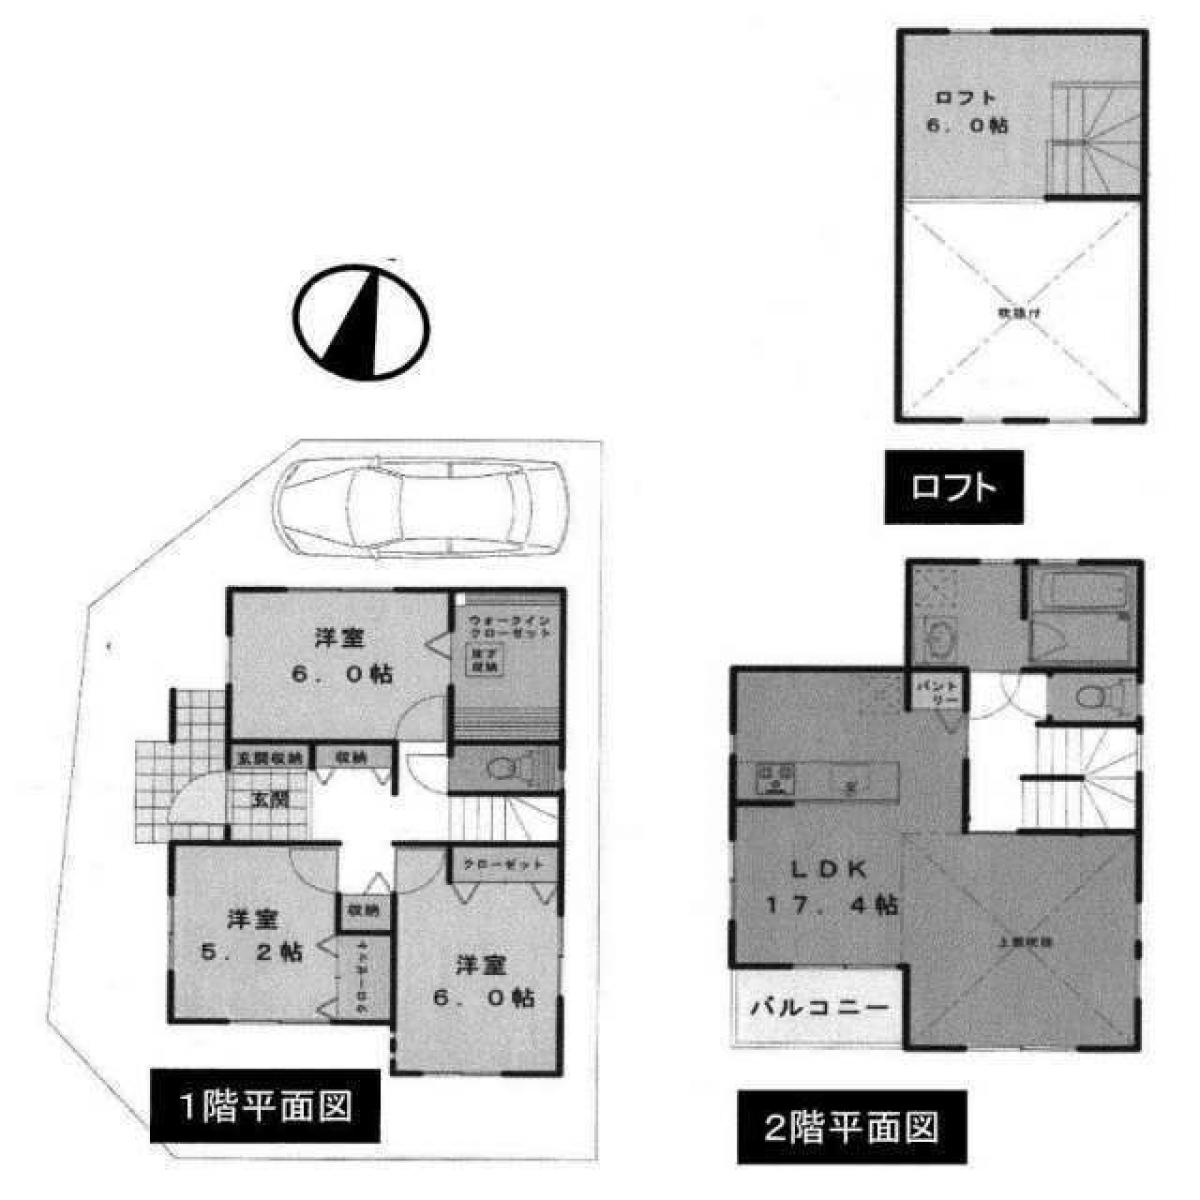 Picture of Home For Sale in Chigasaki Shi, Kanagawa, Japan